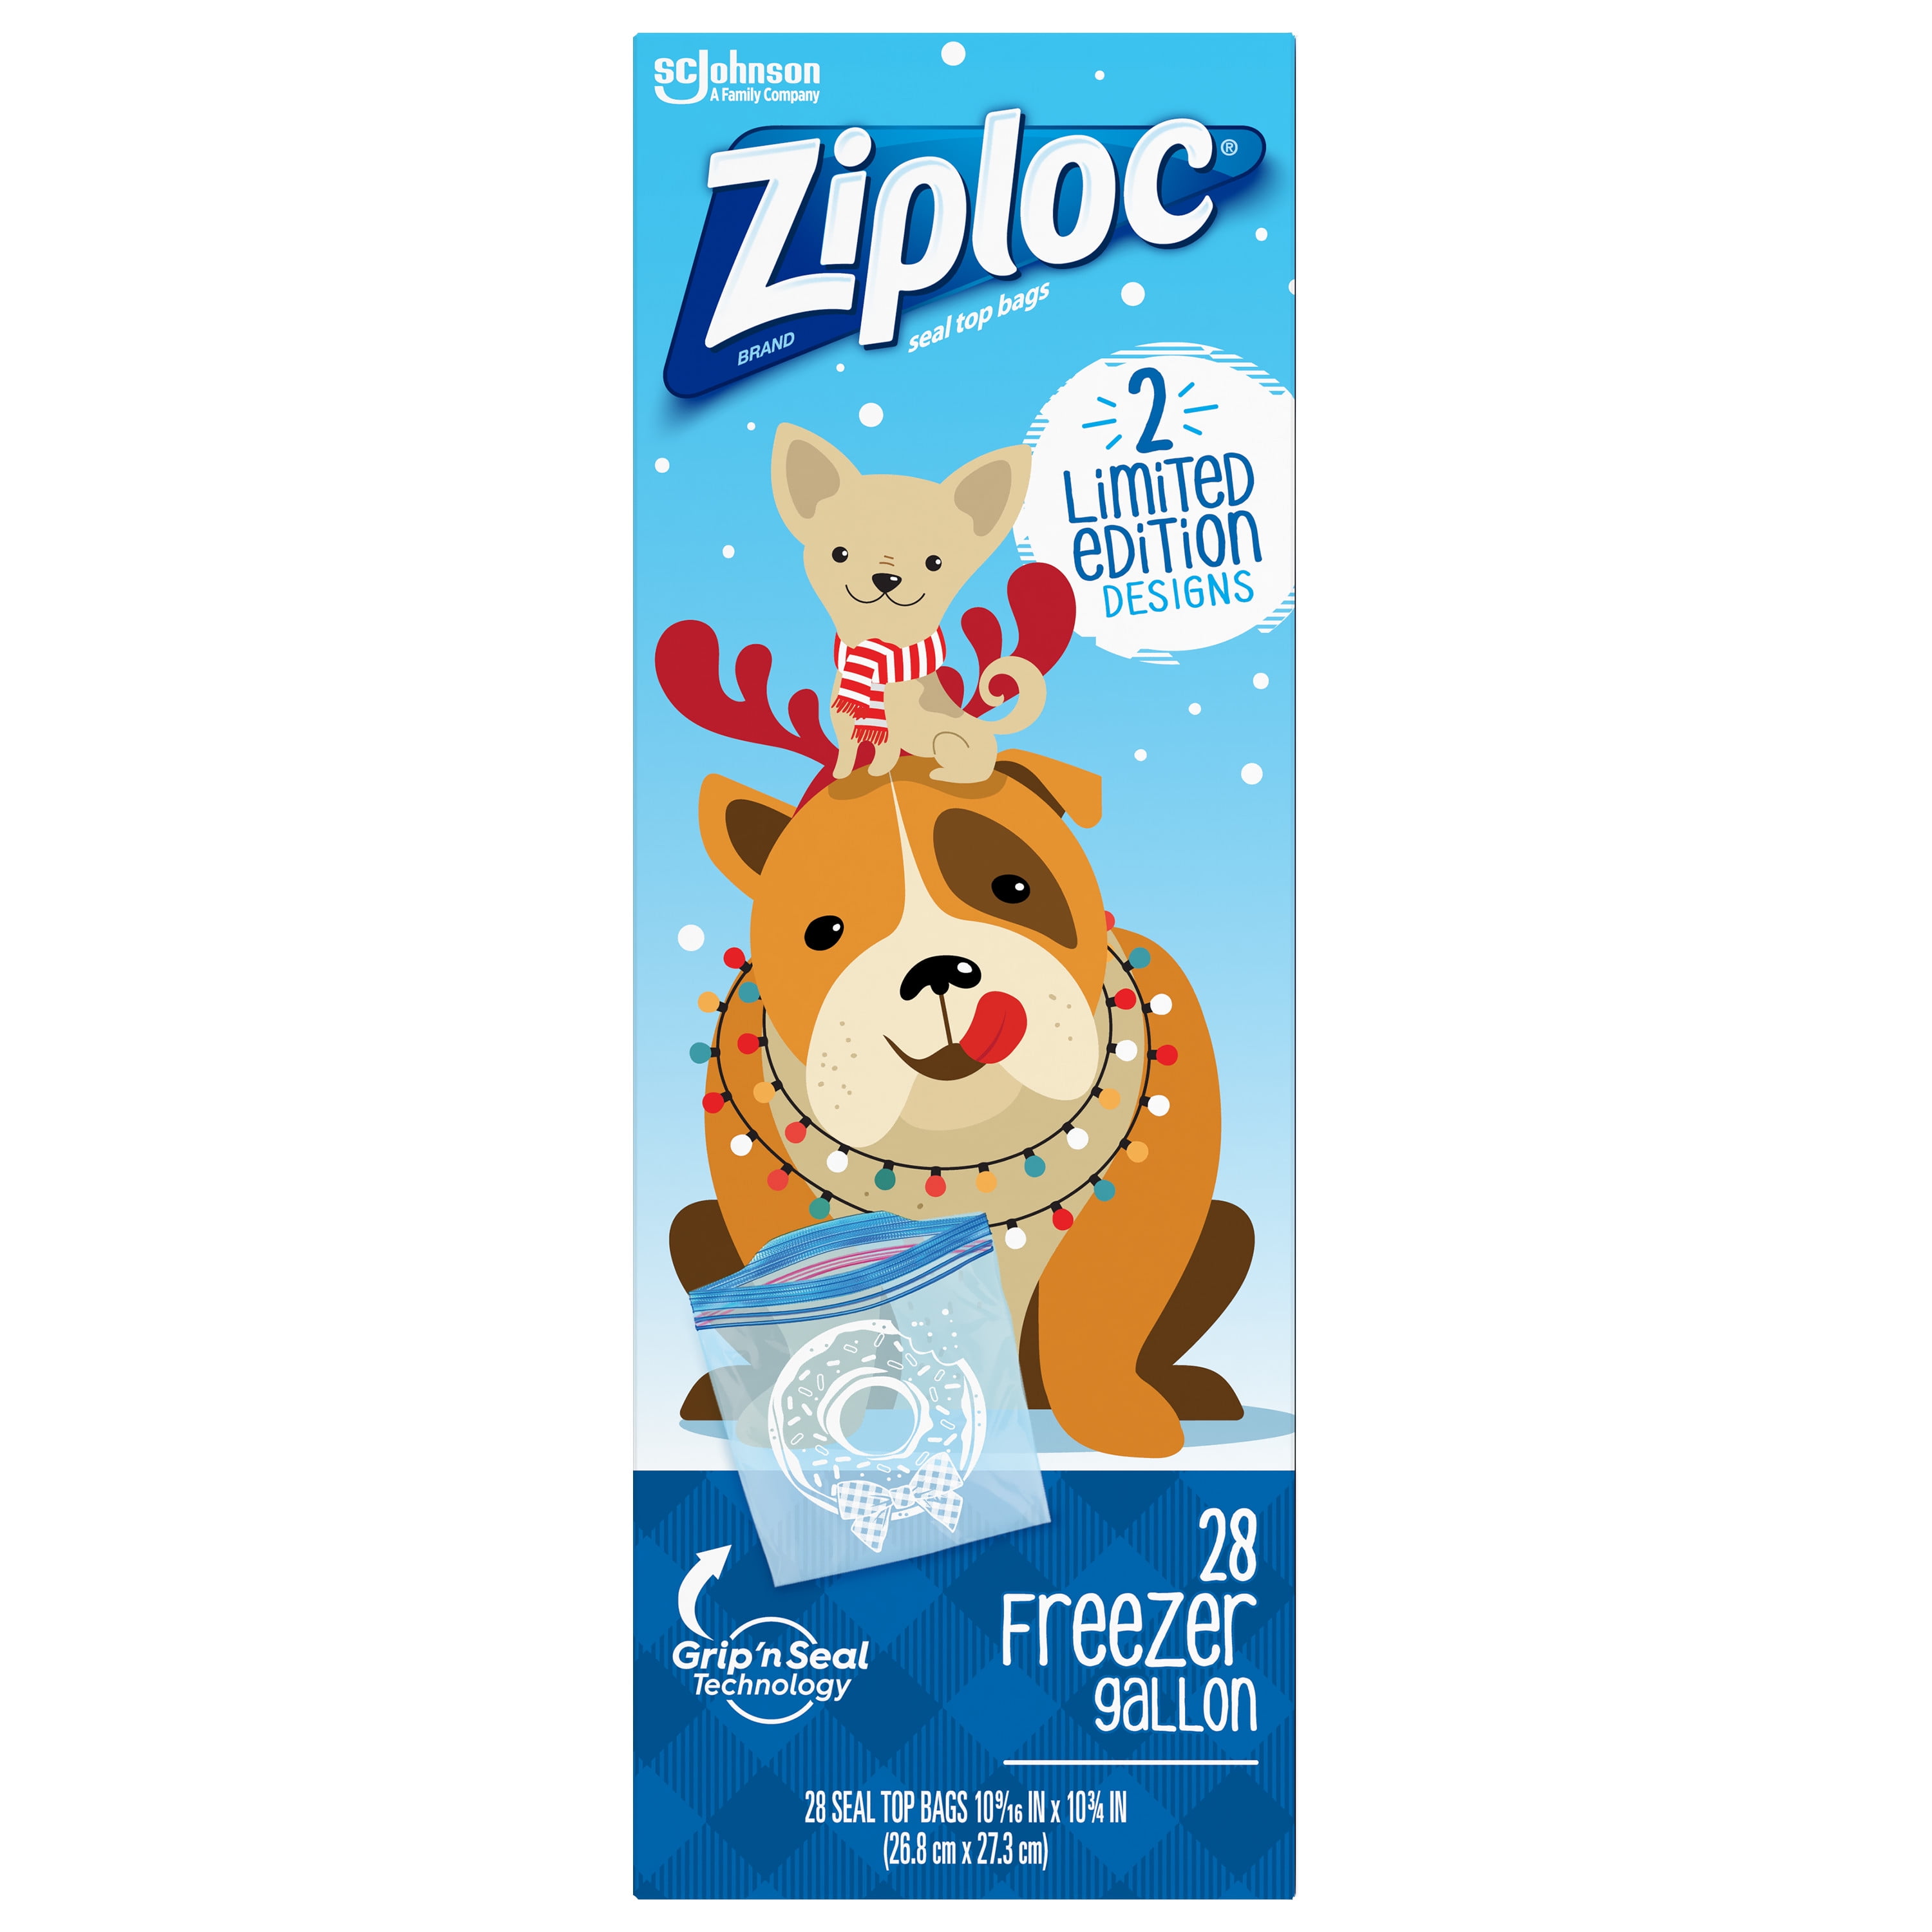 Ziploc Brand Holiday Freezer Gallon Bags, 28 Count 